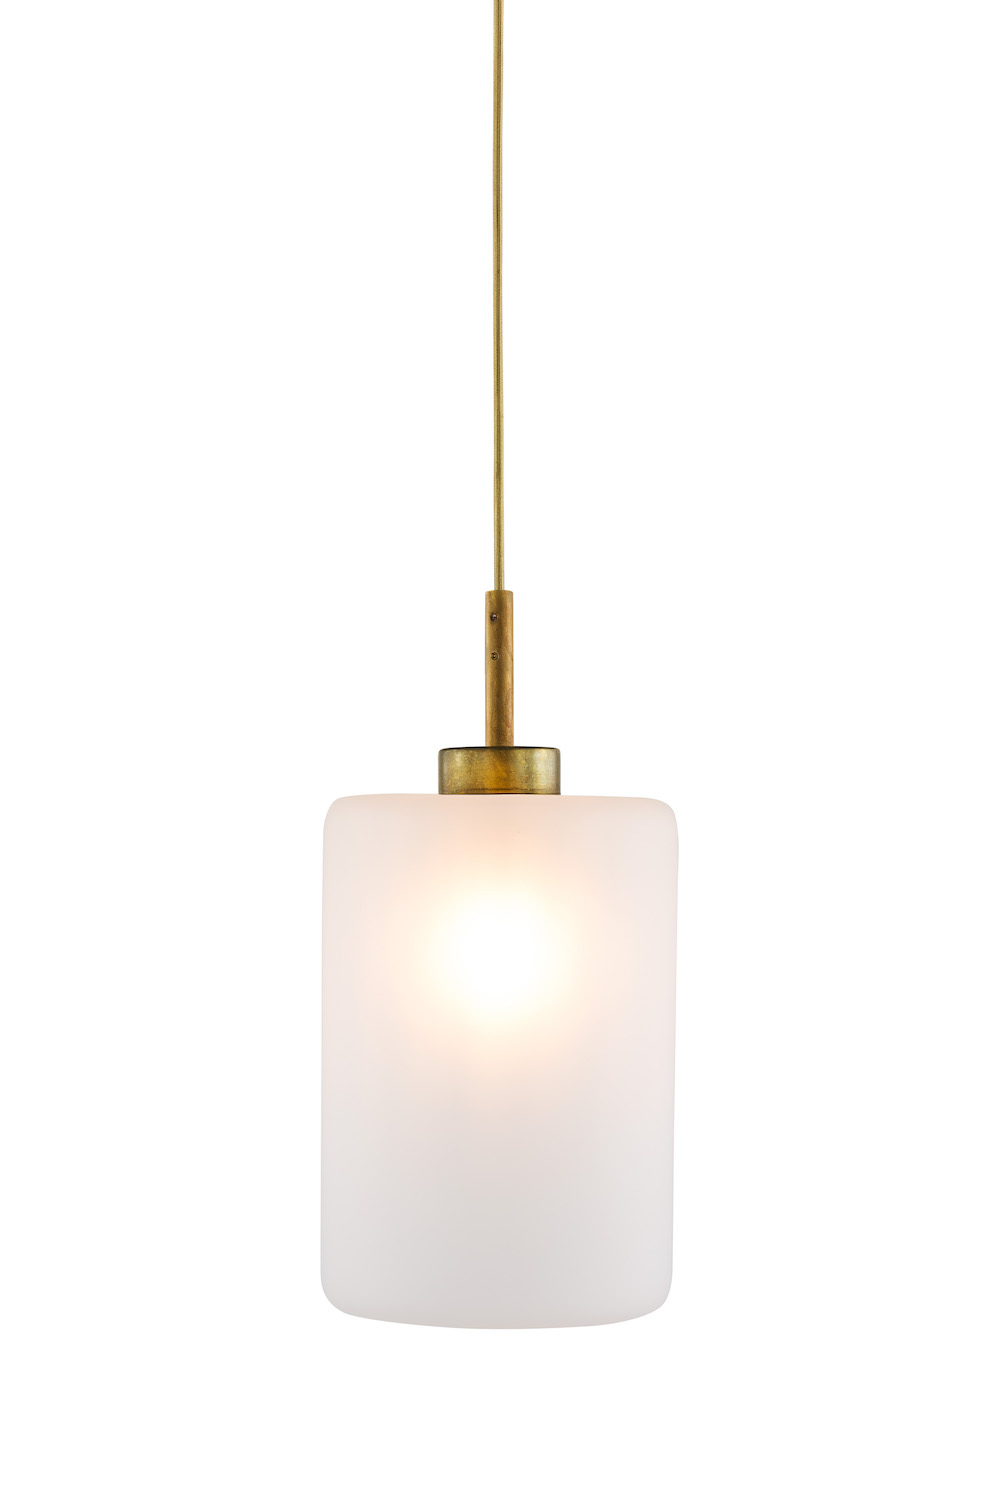 brandvanegmond_Louise-standard-model-hanginglamp_brass-burnished-finish_LO1BRBUR-GLLOSAT22_white-background.jpg